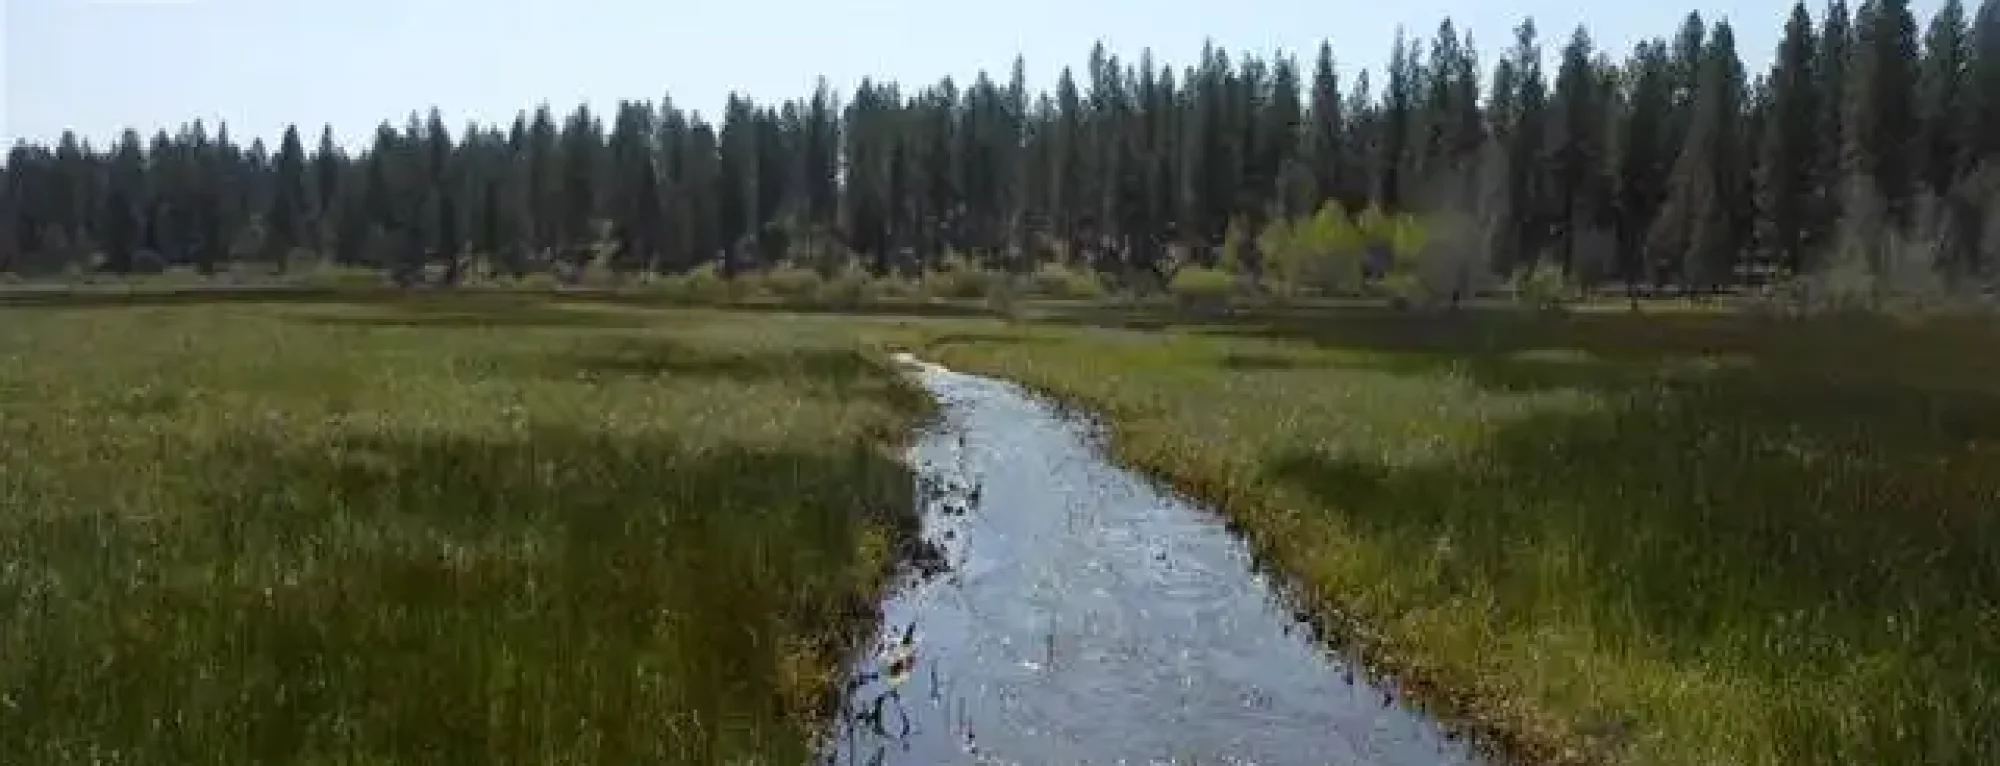 trail-creek-meadow-ranch-for-sale